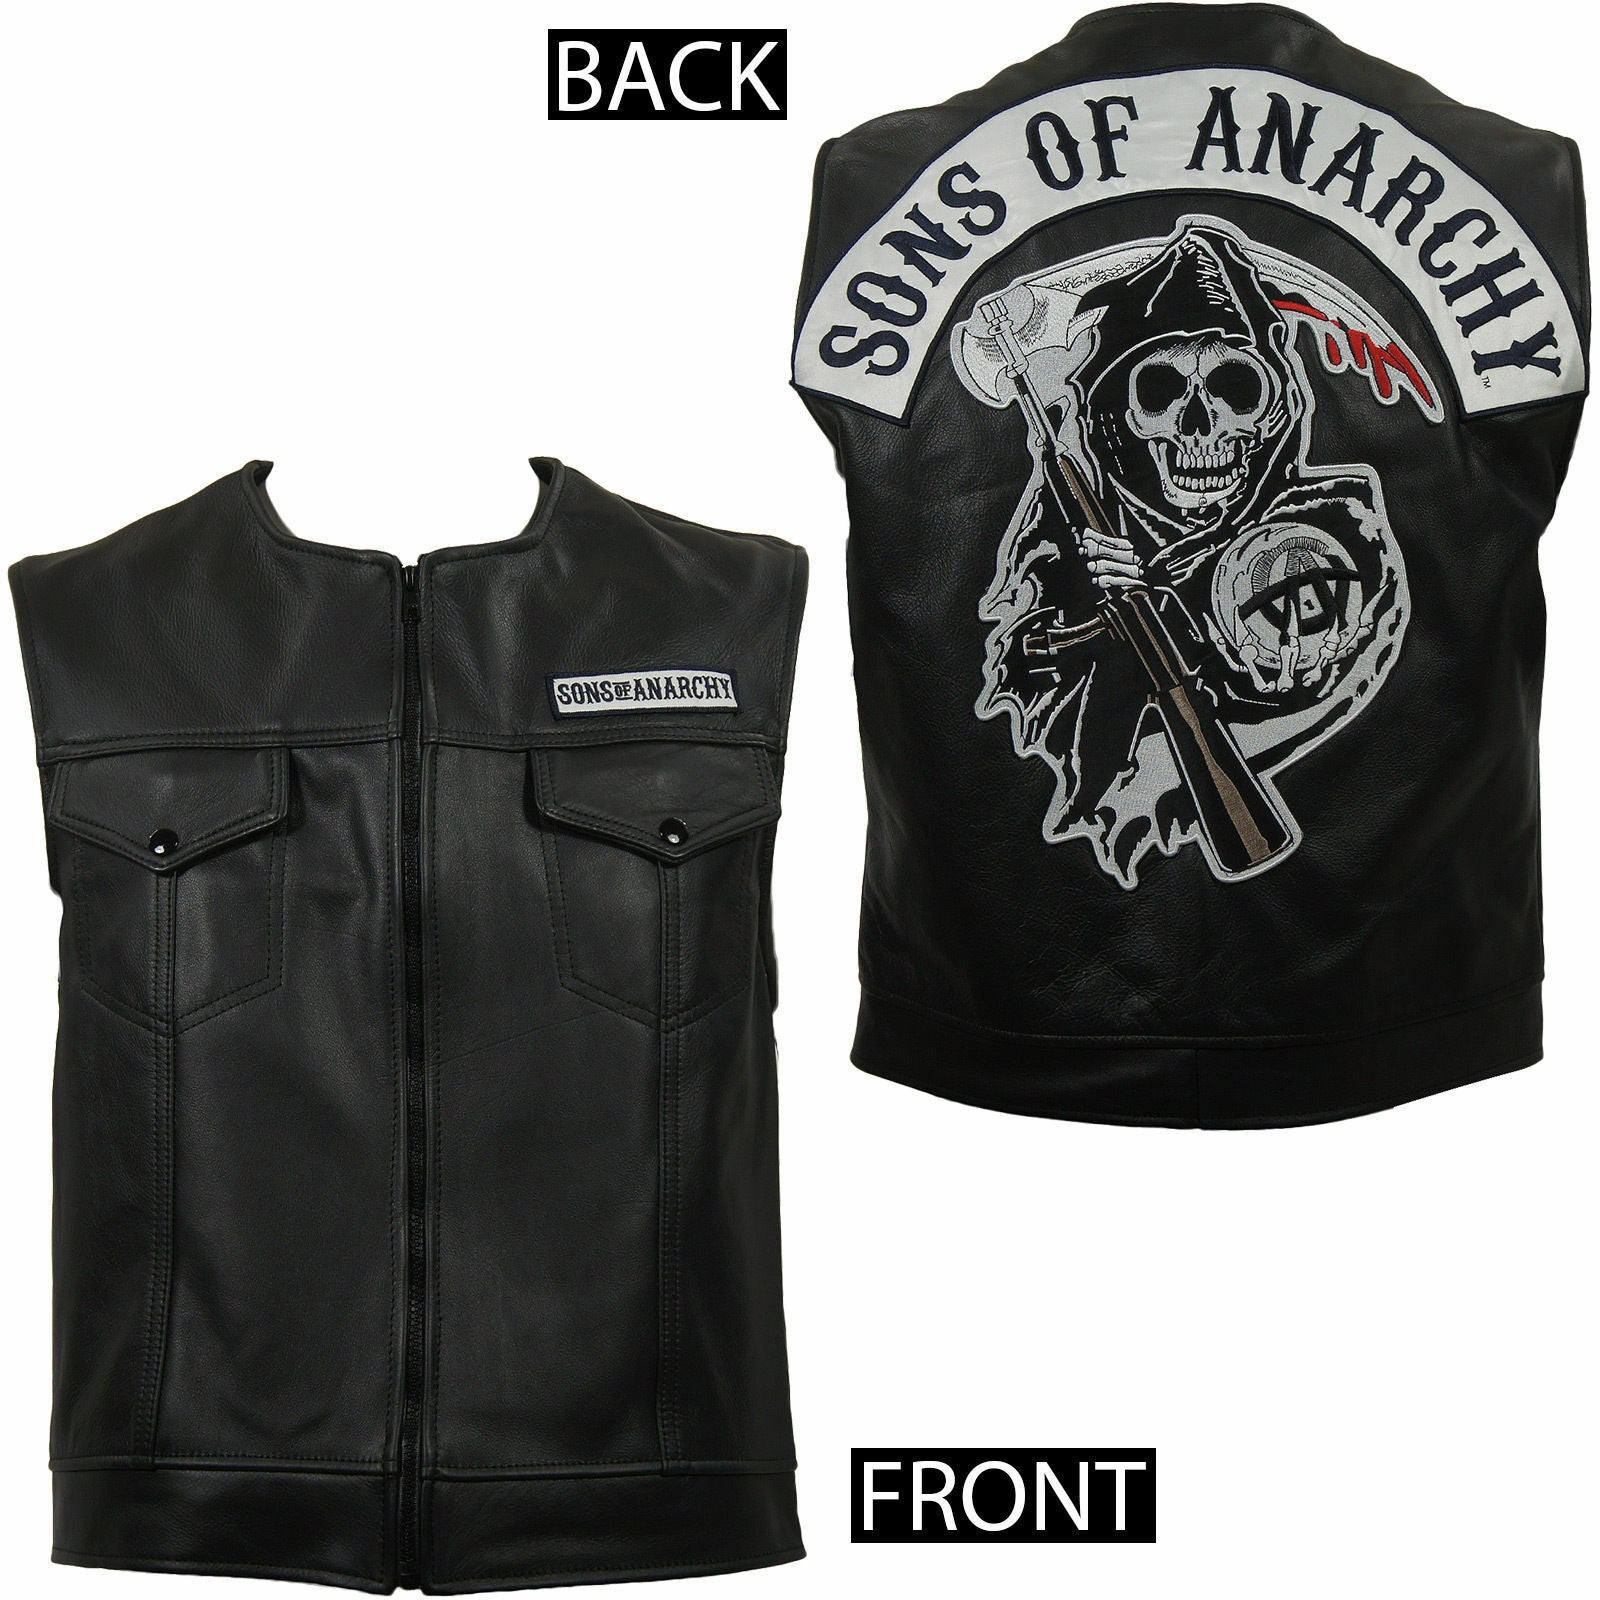 Spine Spark SOA Sons of Anarchy Leather Biker Stylish Vest